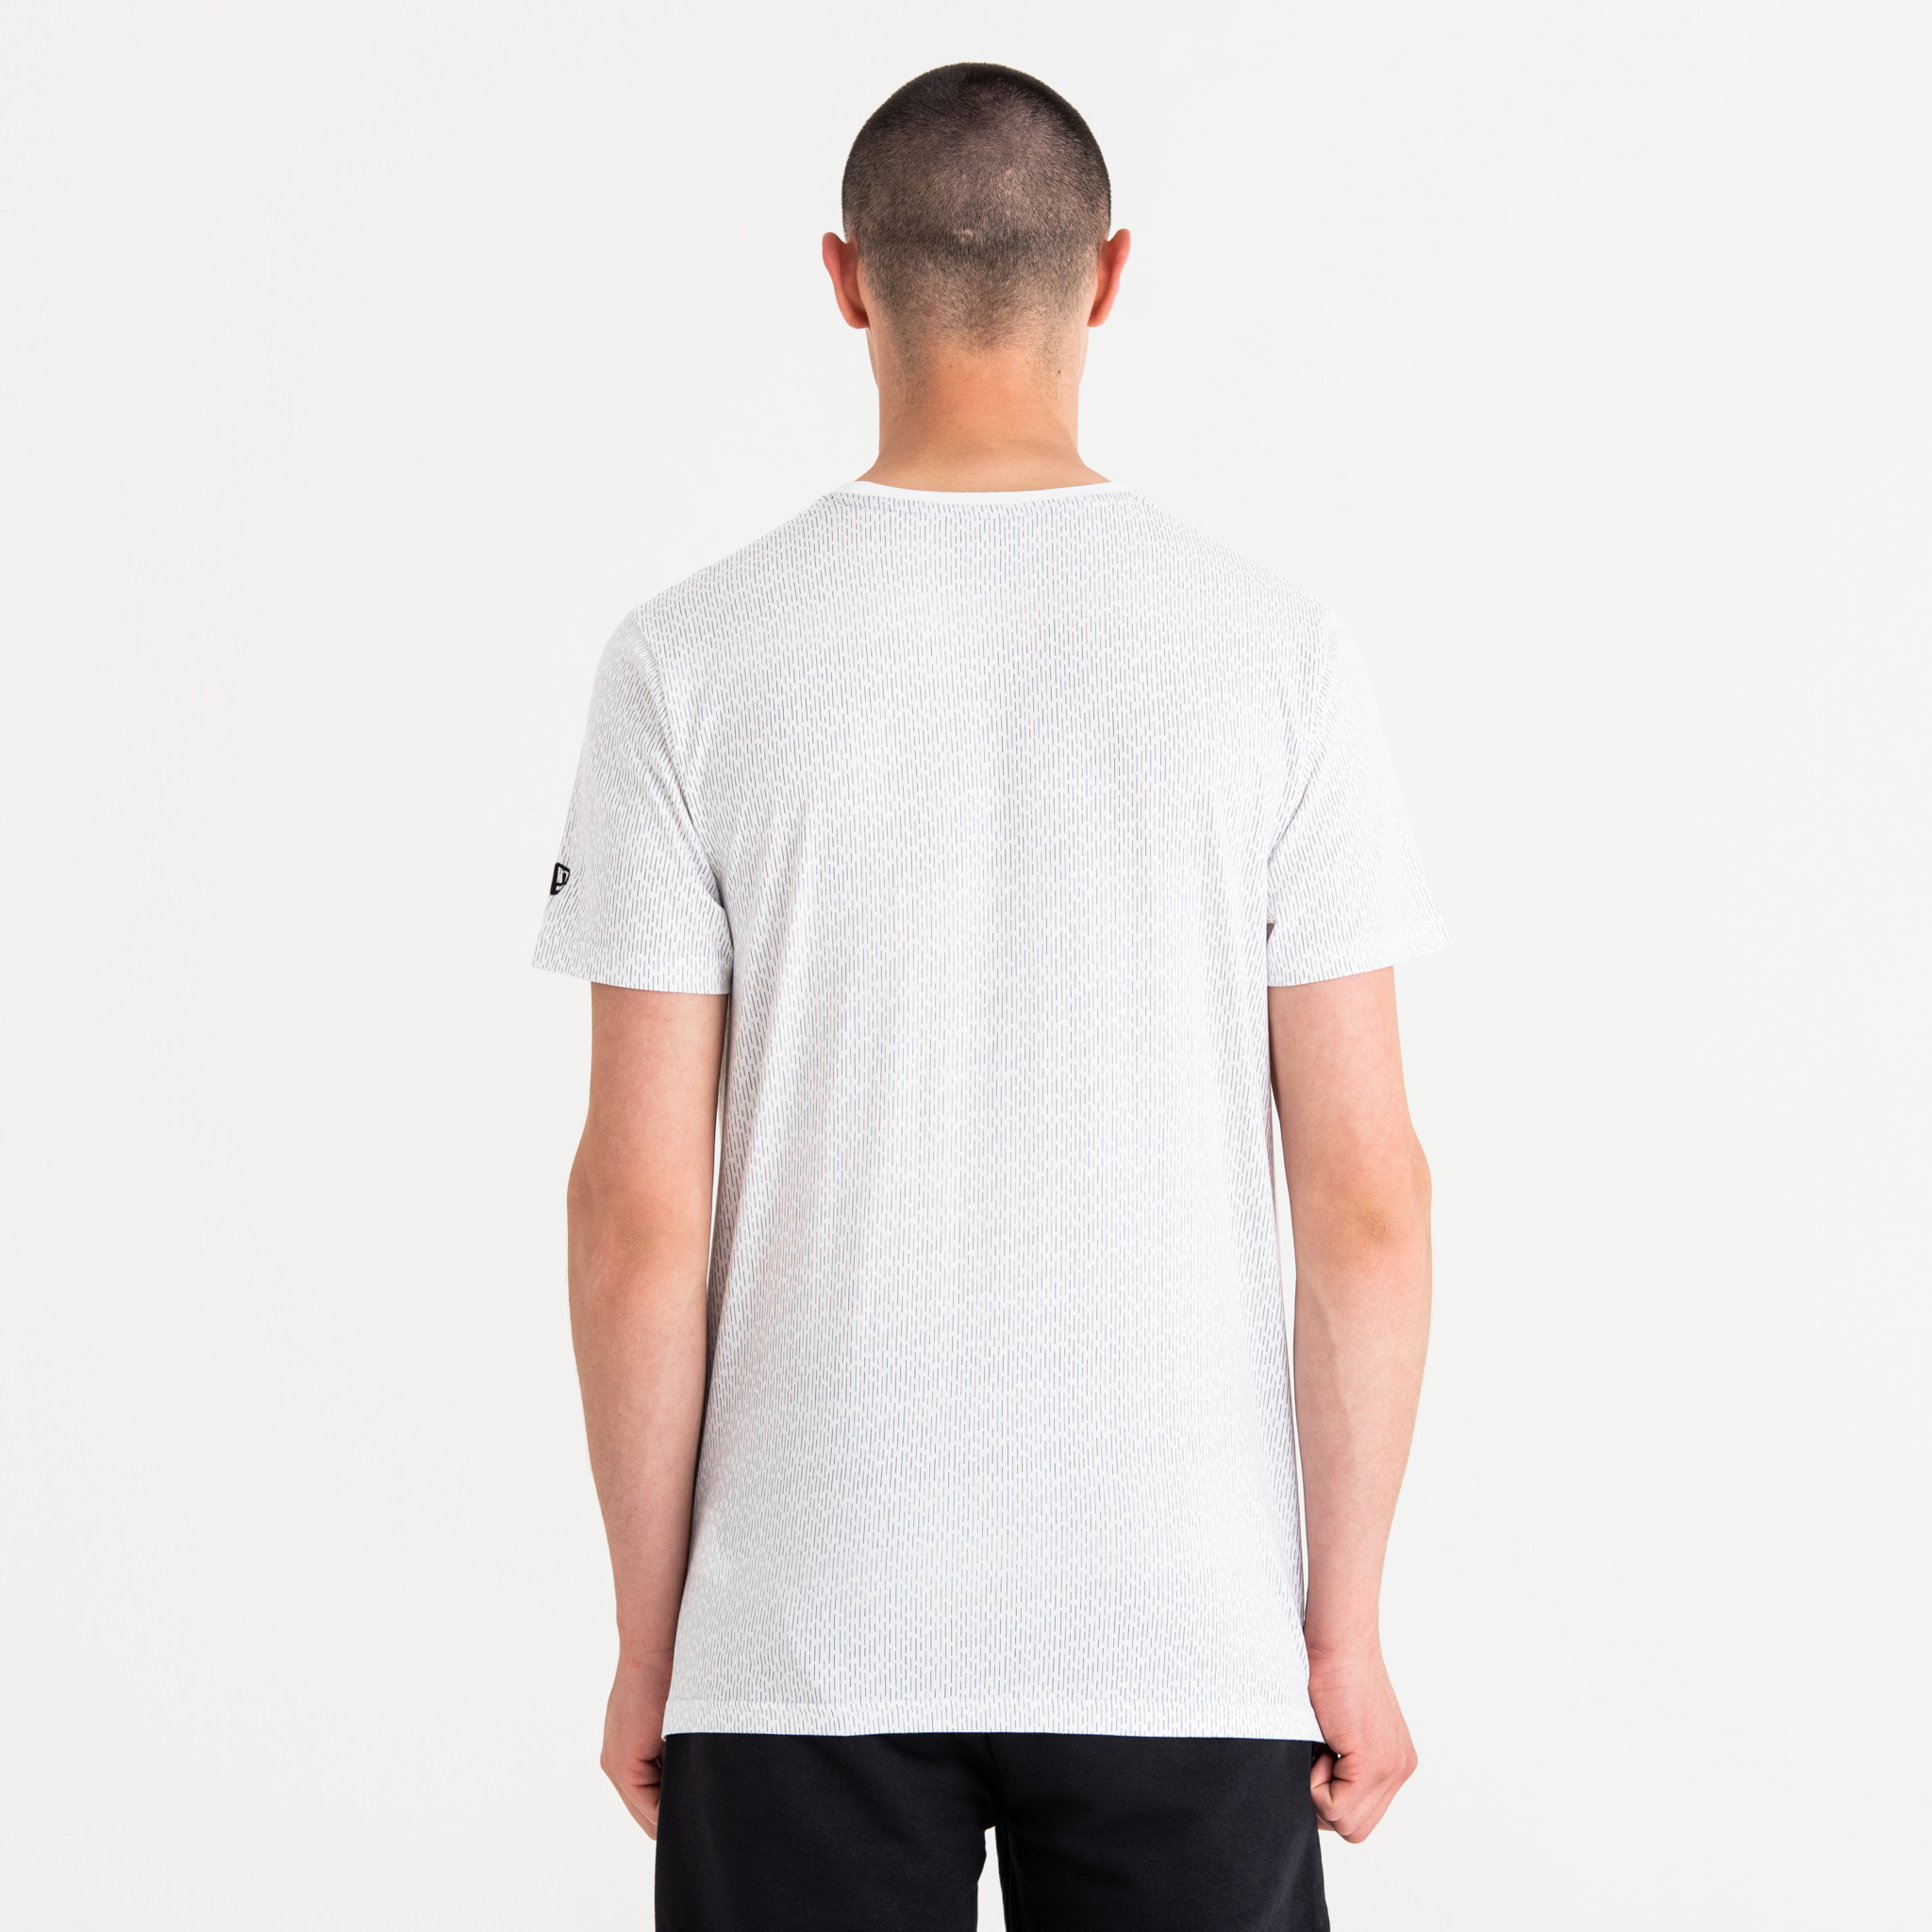 New Era – Weißes T-Shirt – Rain Camo